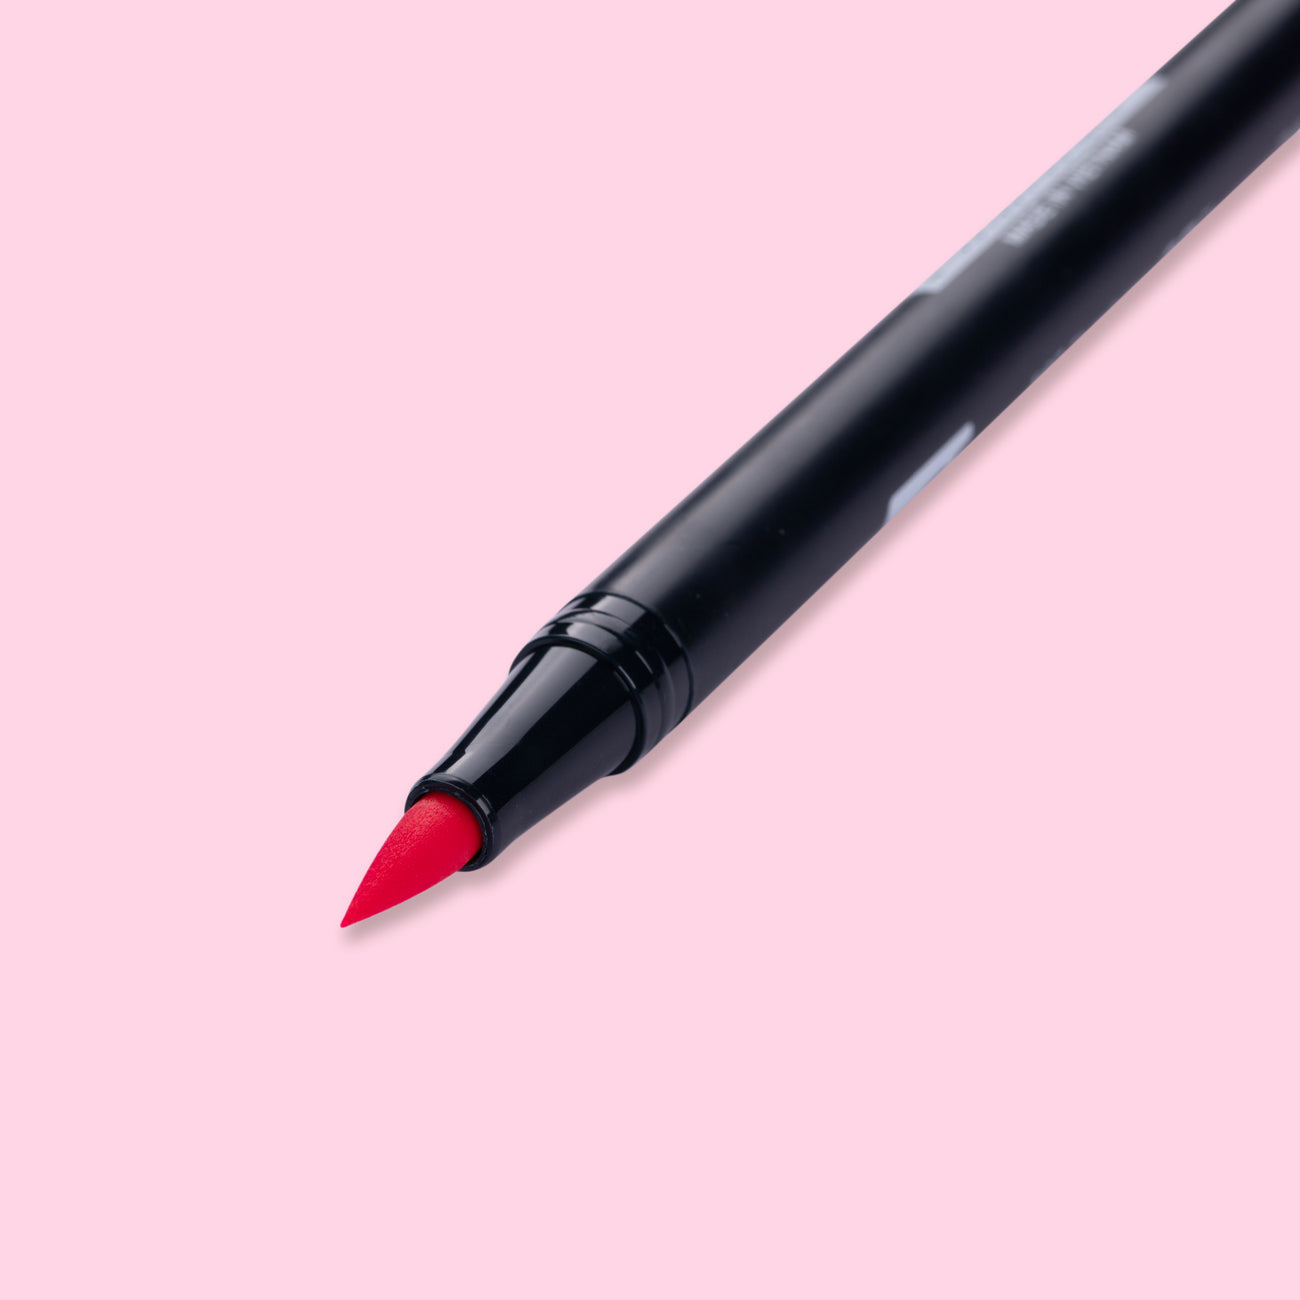 Tombow Dual Brush Pen - 703 - Pink Rose